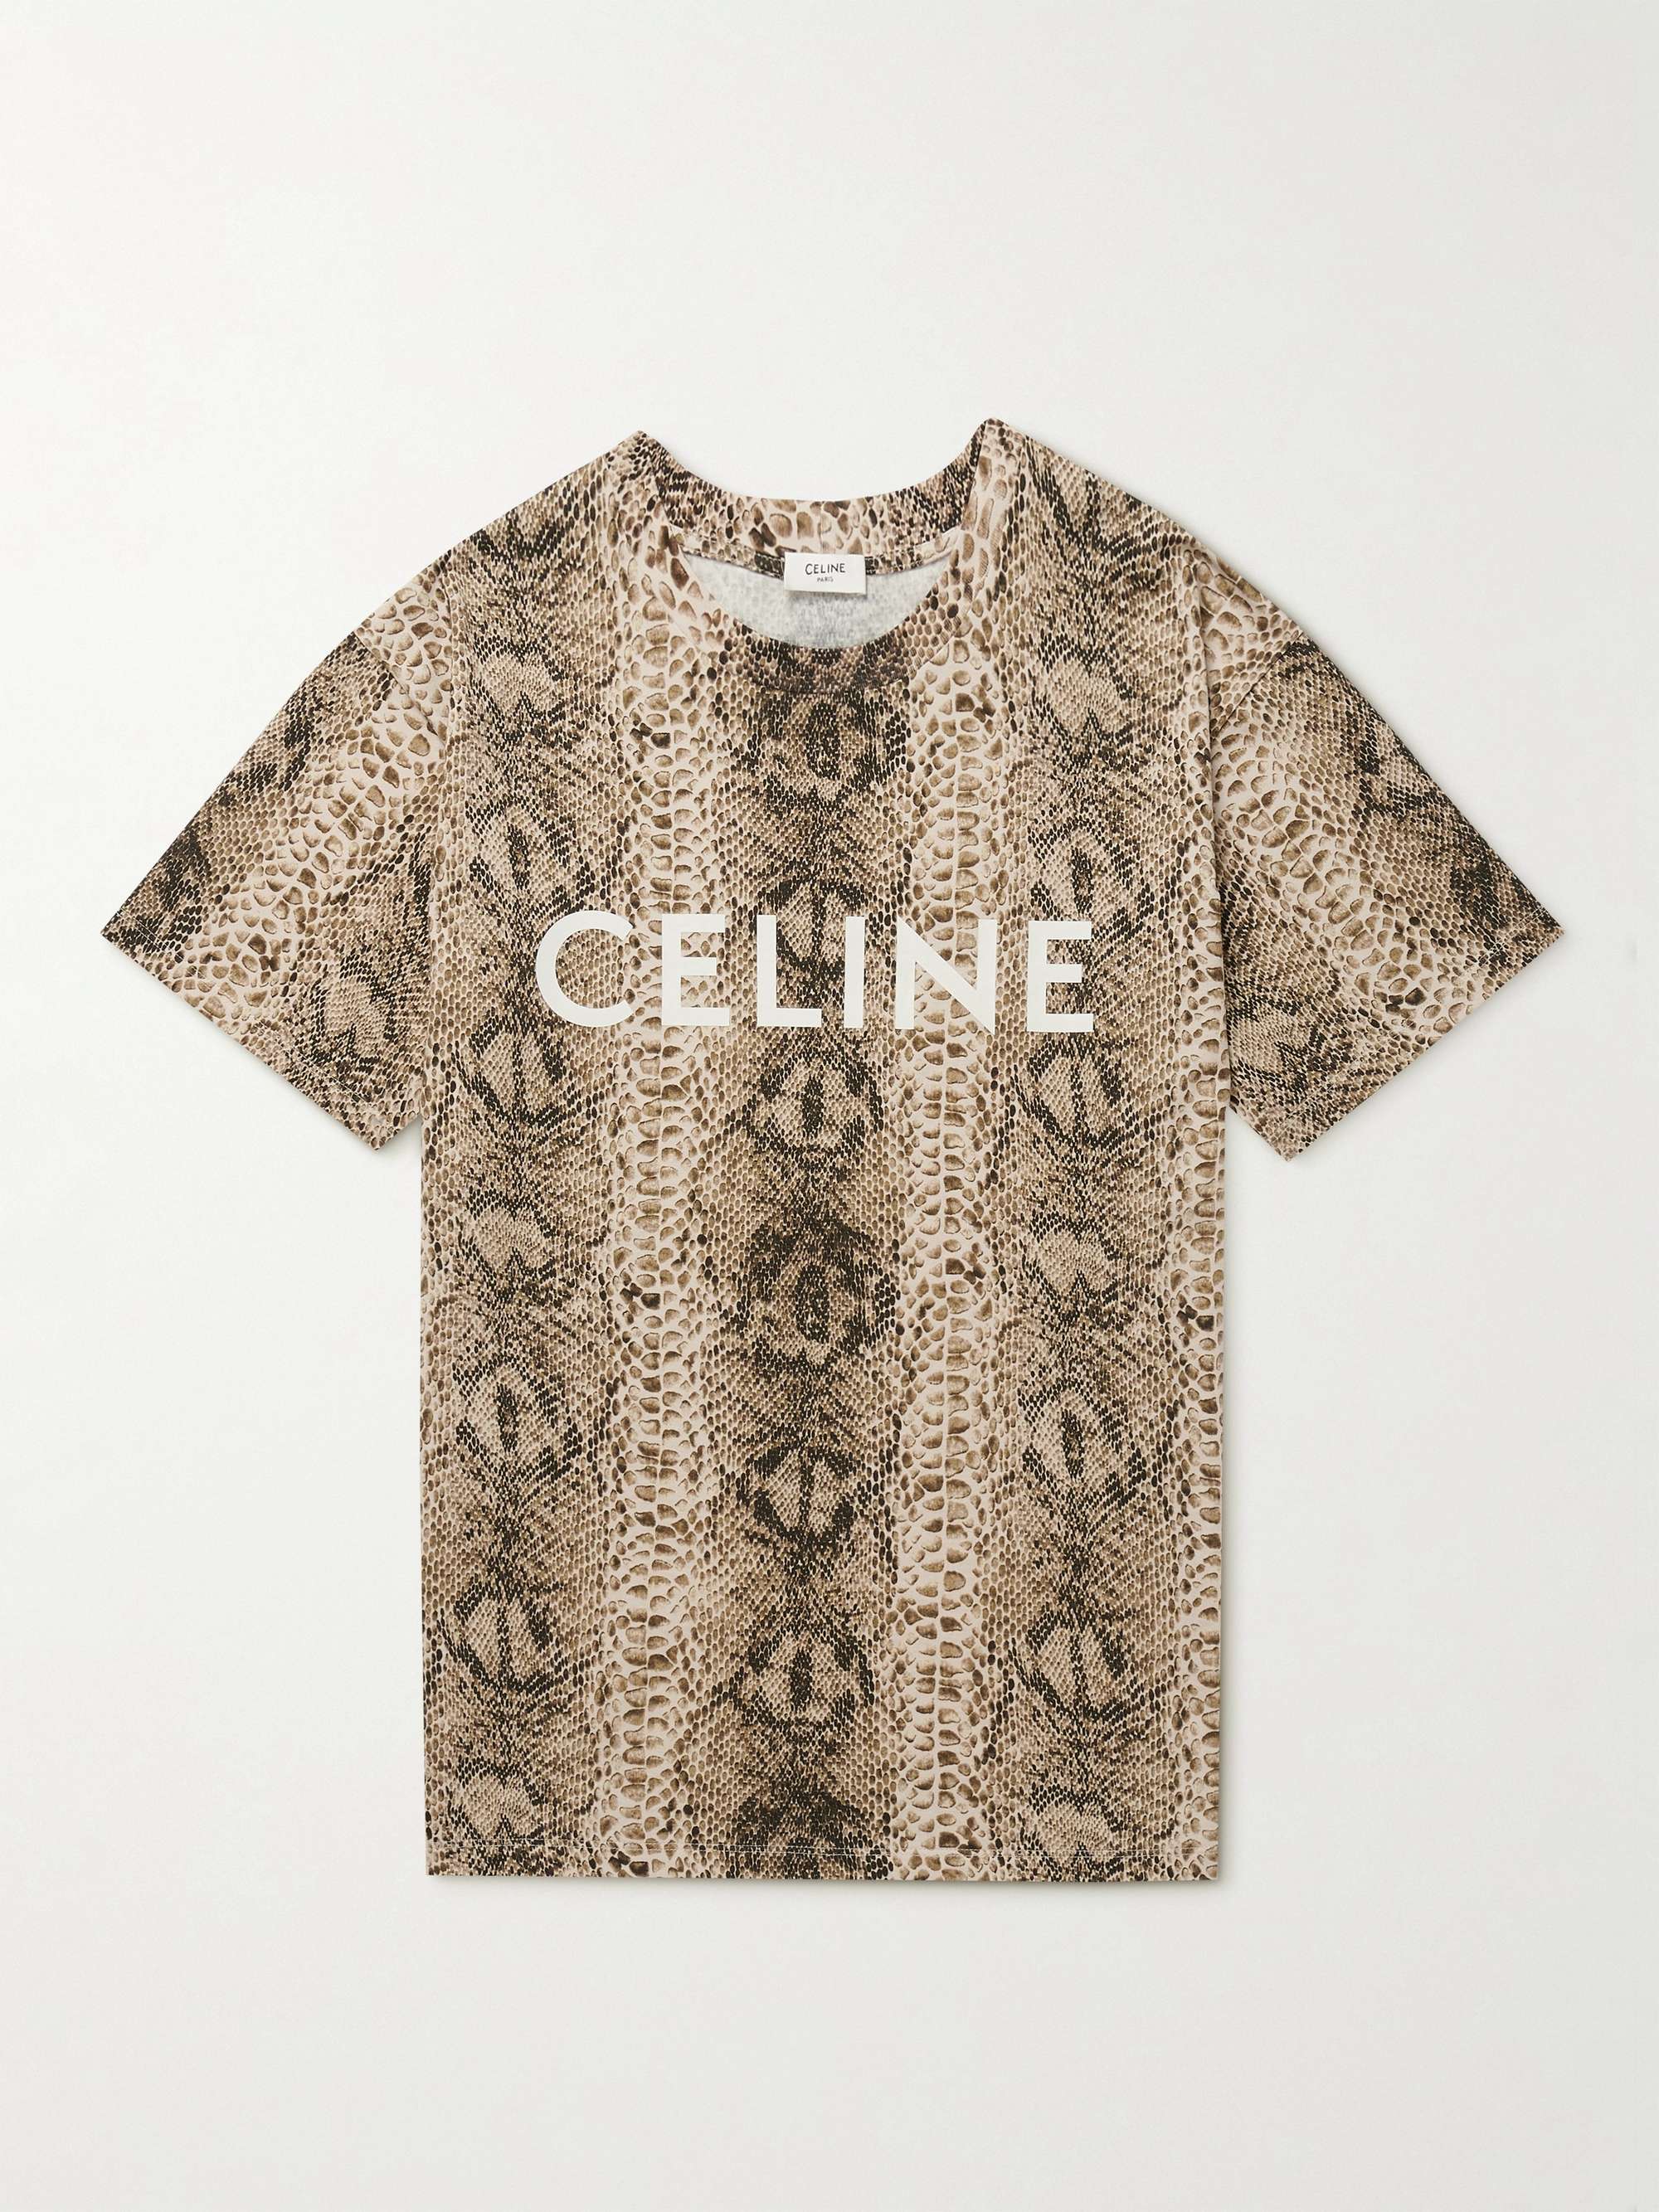 CELINE HOMME Printed Cotton-Jersey T-Shirt | MR PORTER